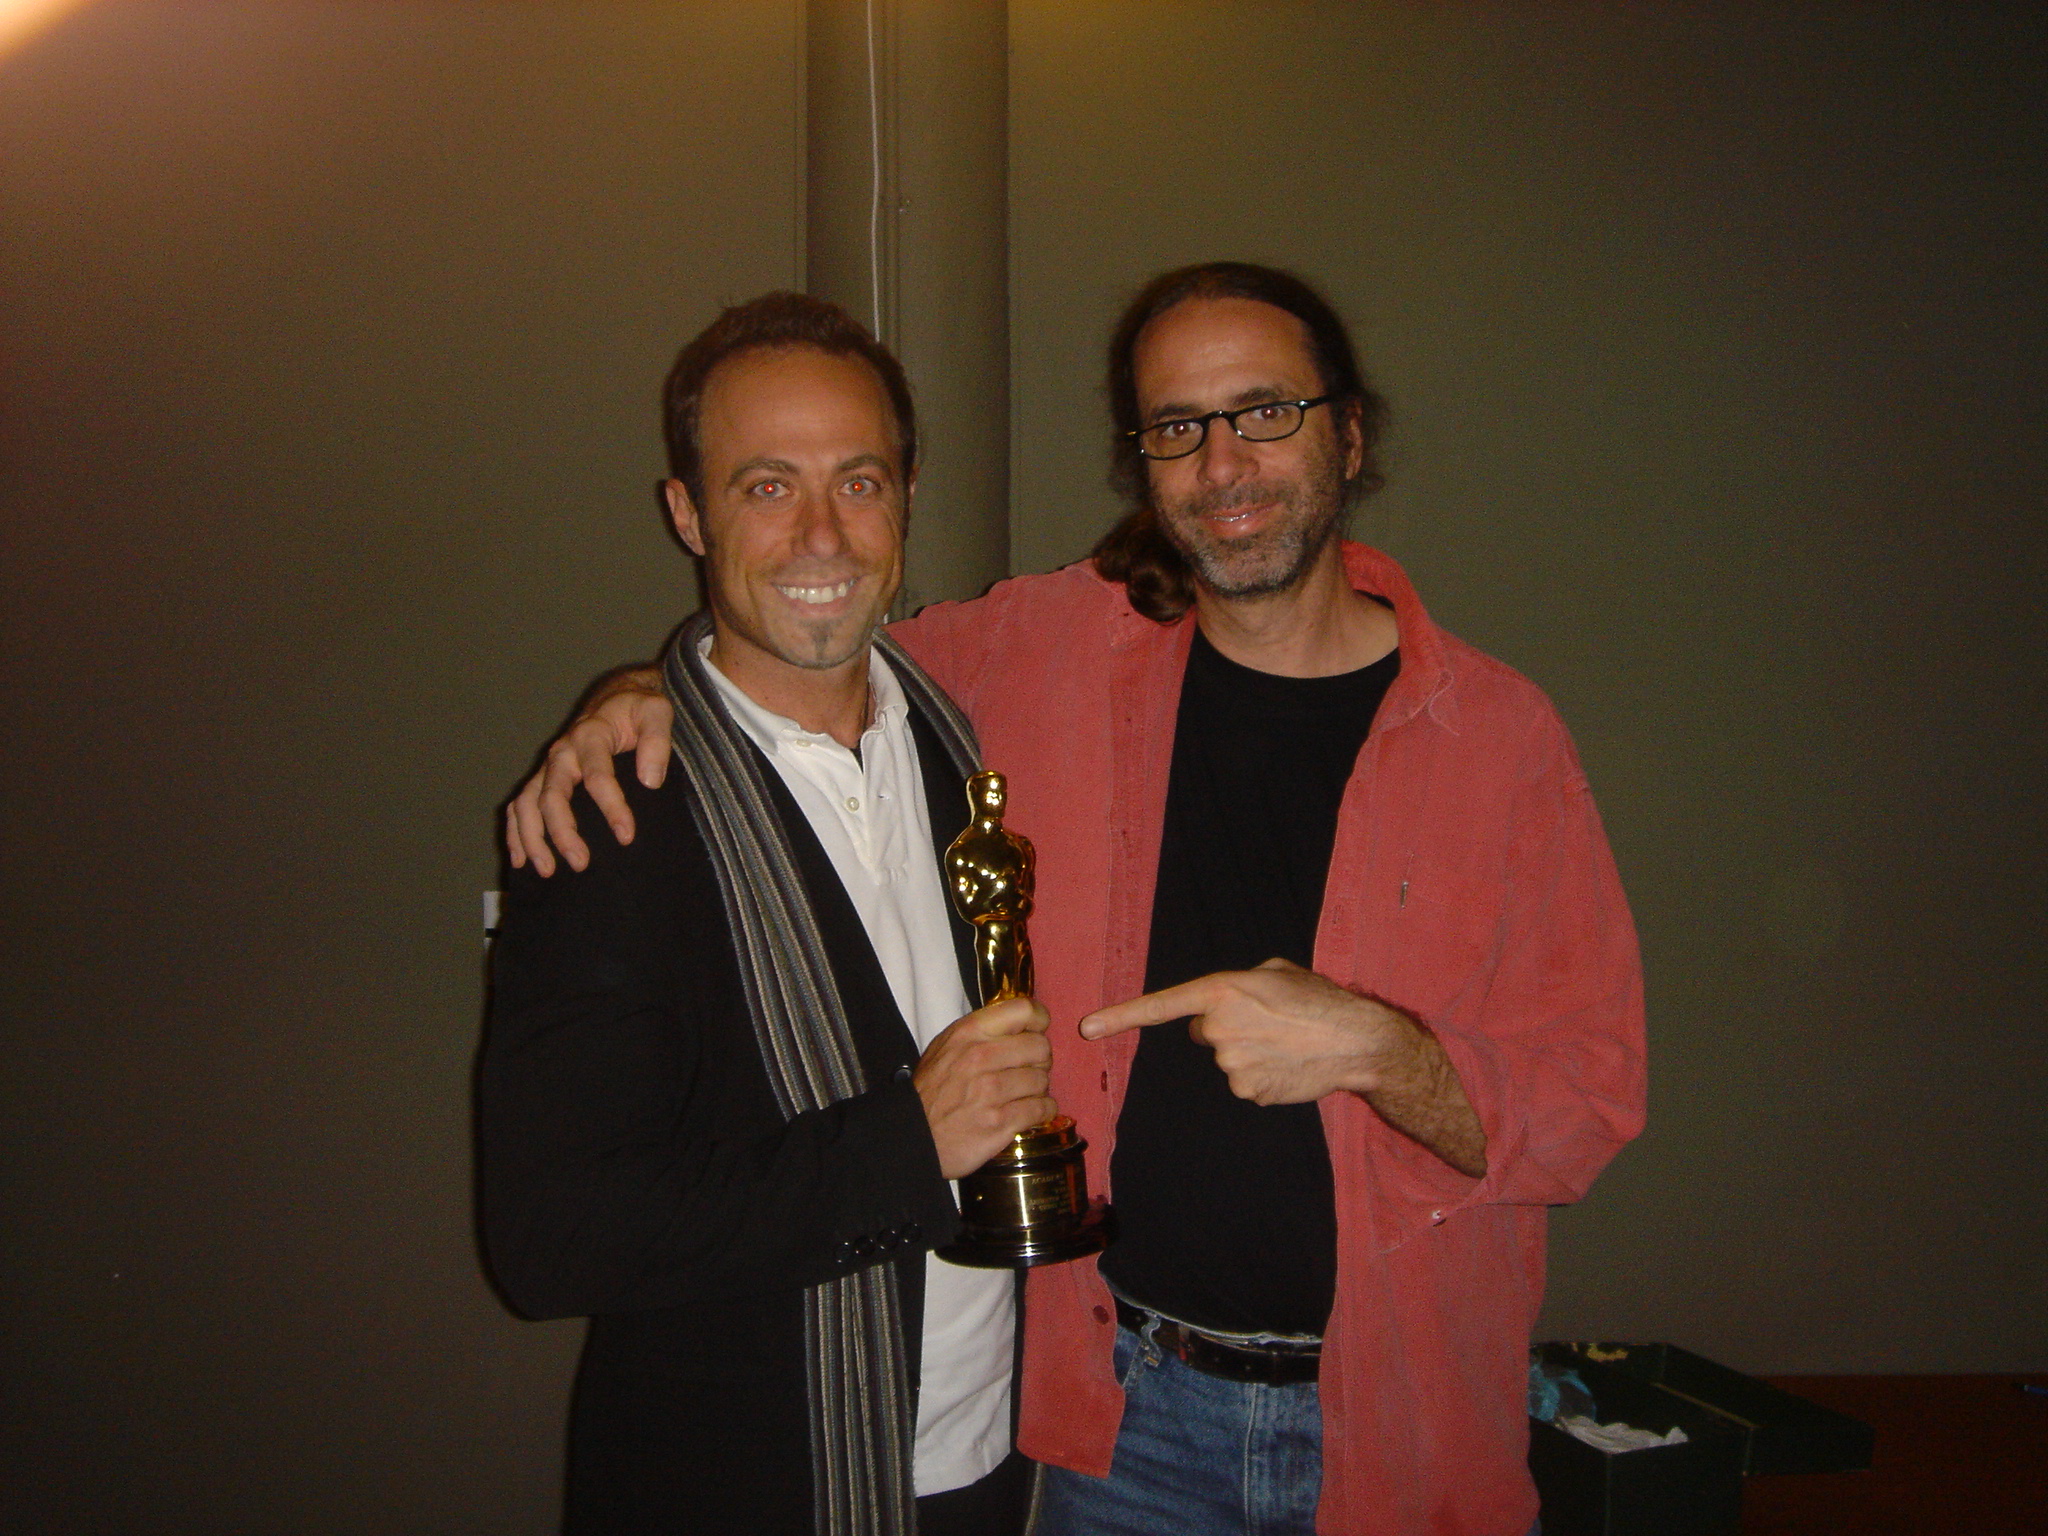 Me with Chris Landreth - Oscar winner for Directing on 